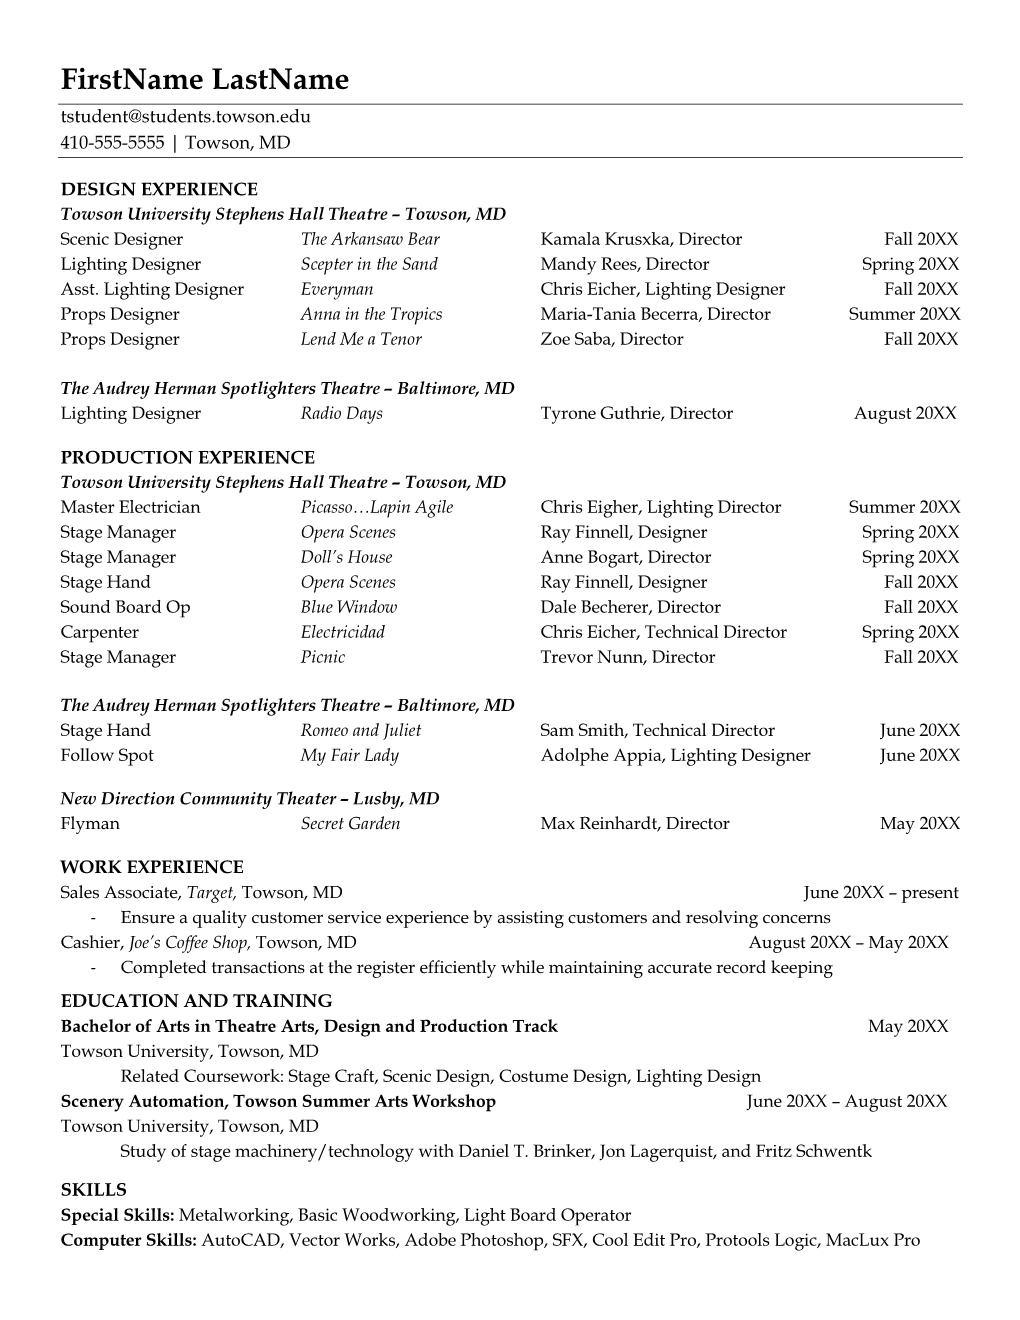 Theatre Arts Resume Sample (PDF)